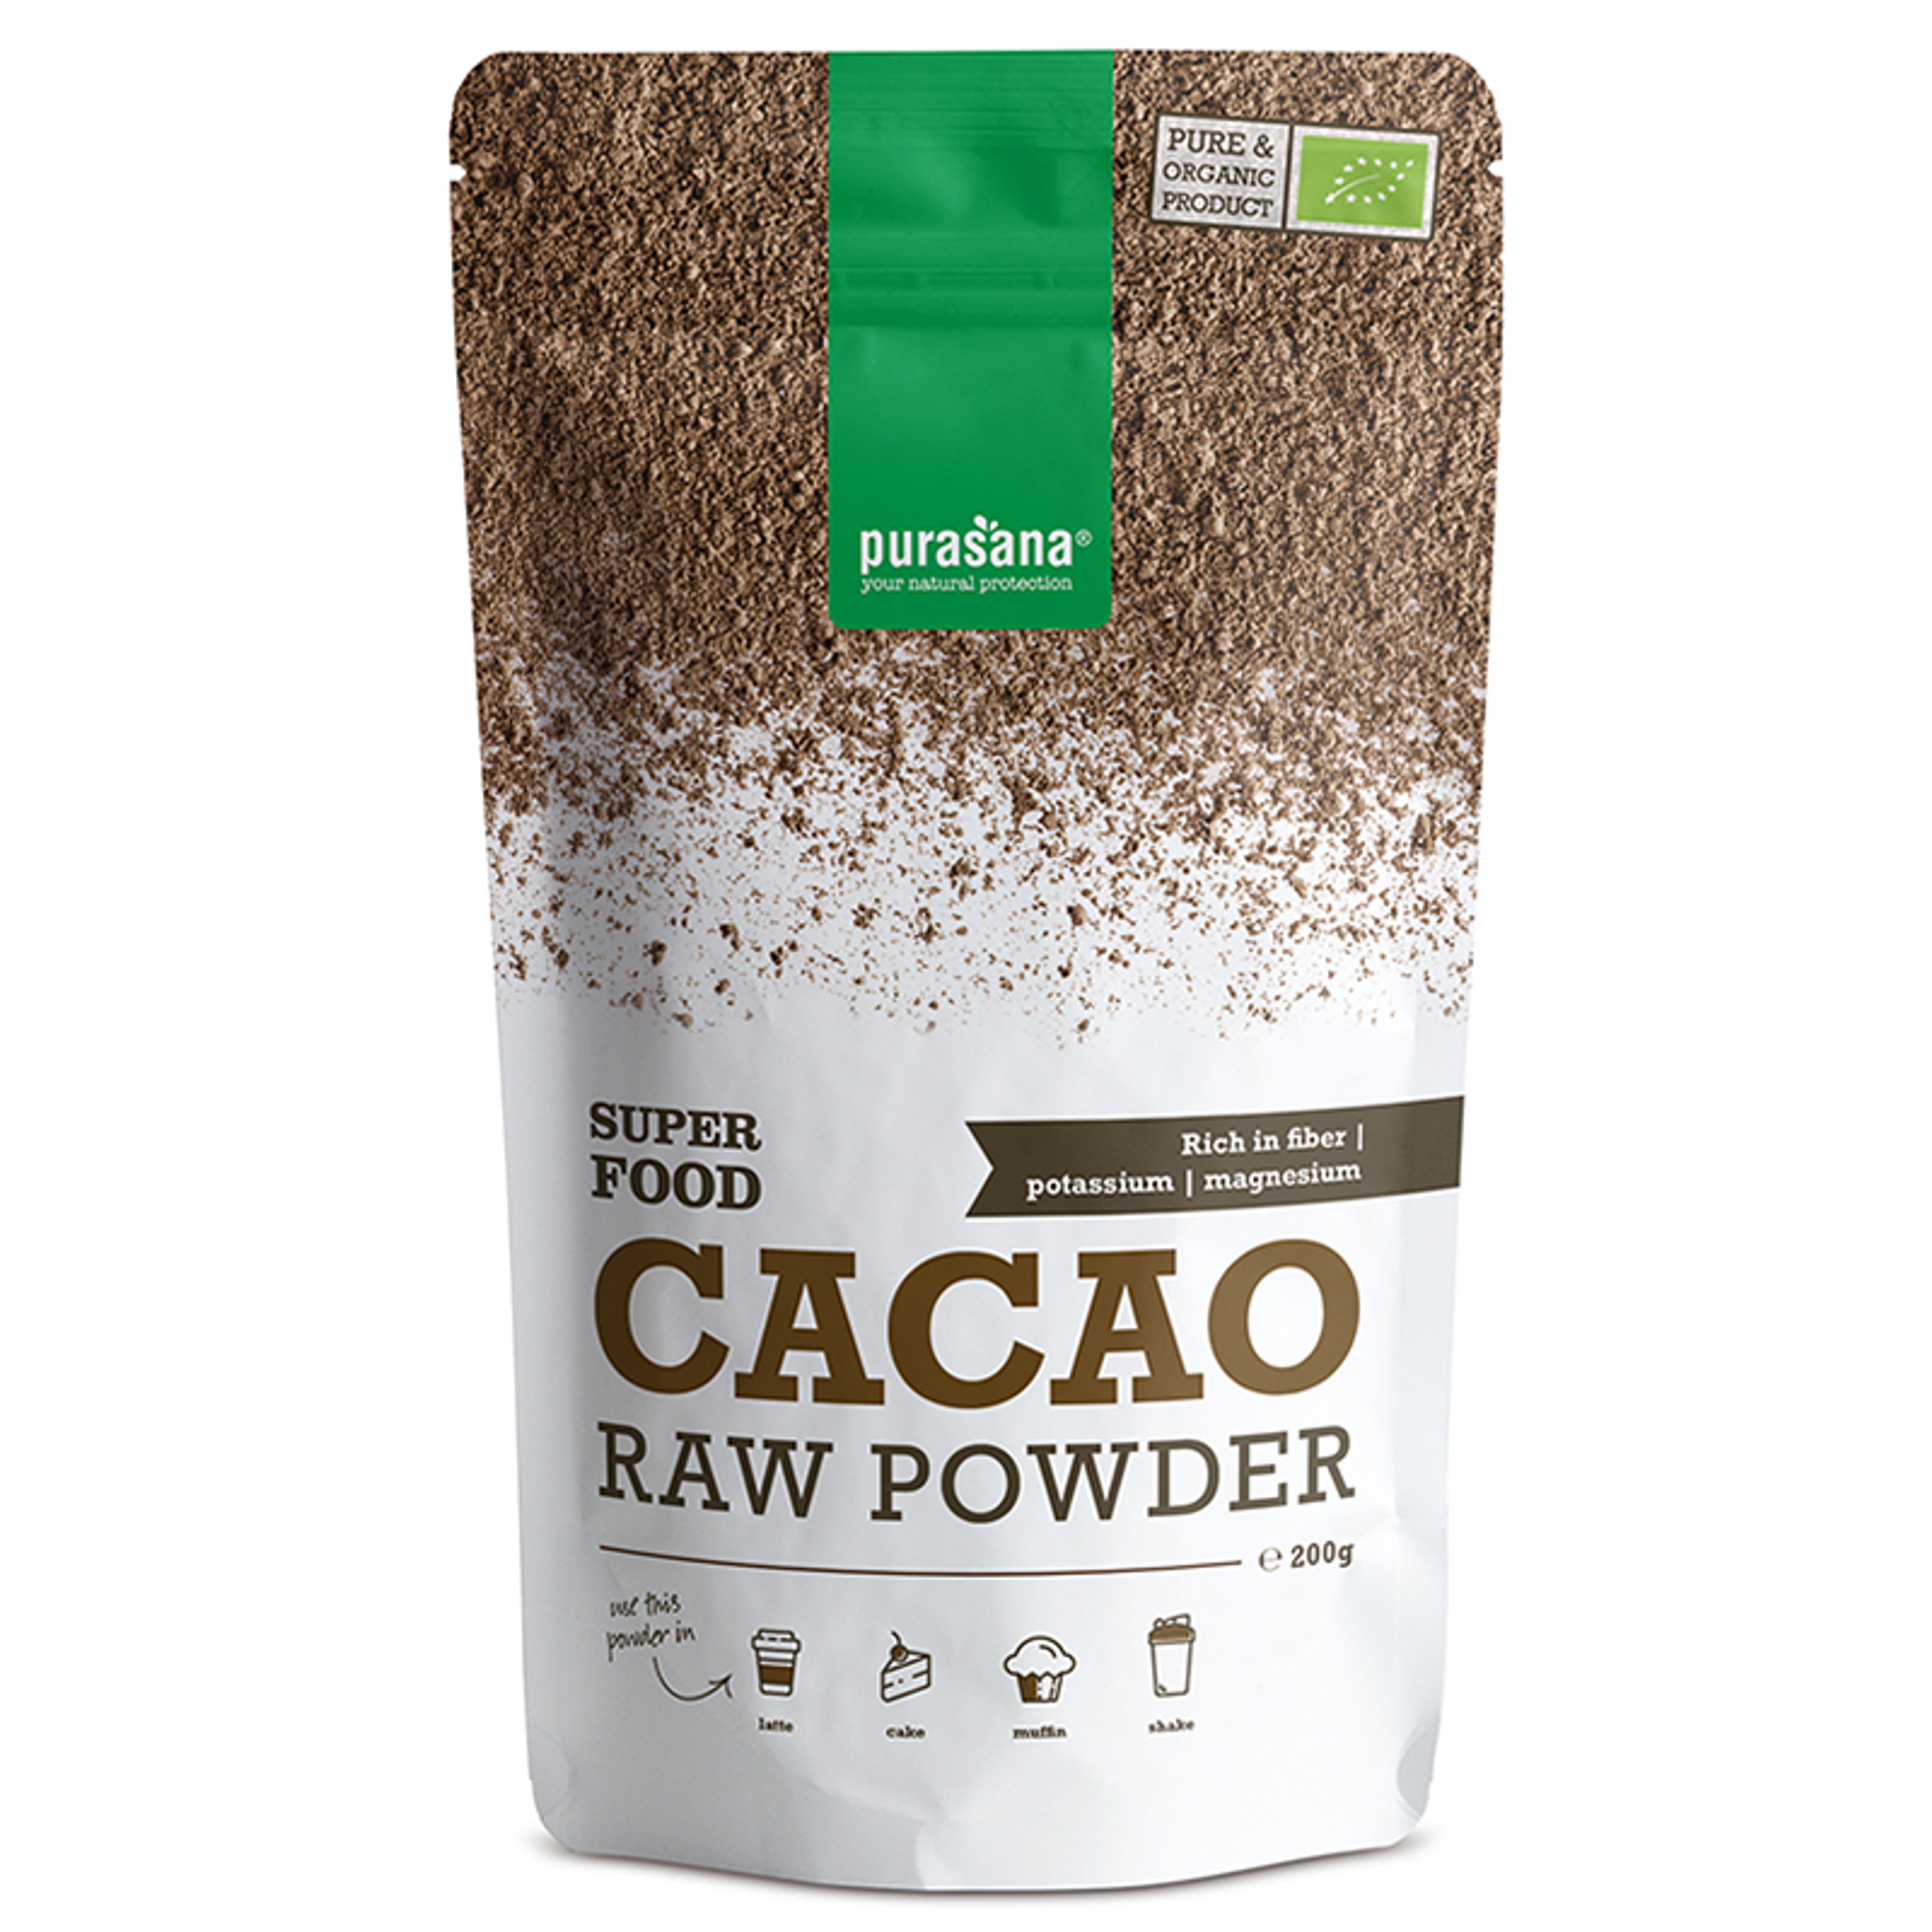 Purasana_Cacao-Raw-Powder.jpg